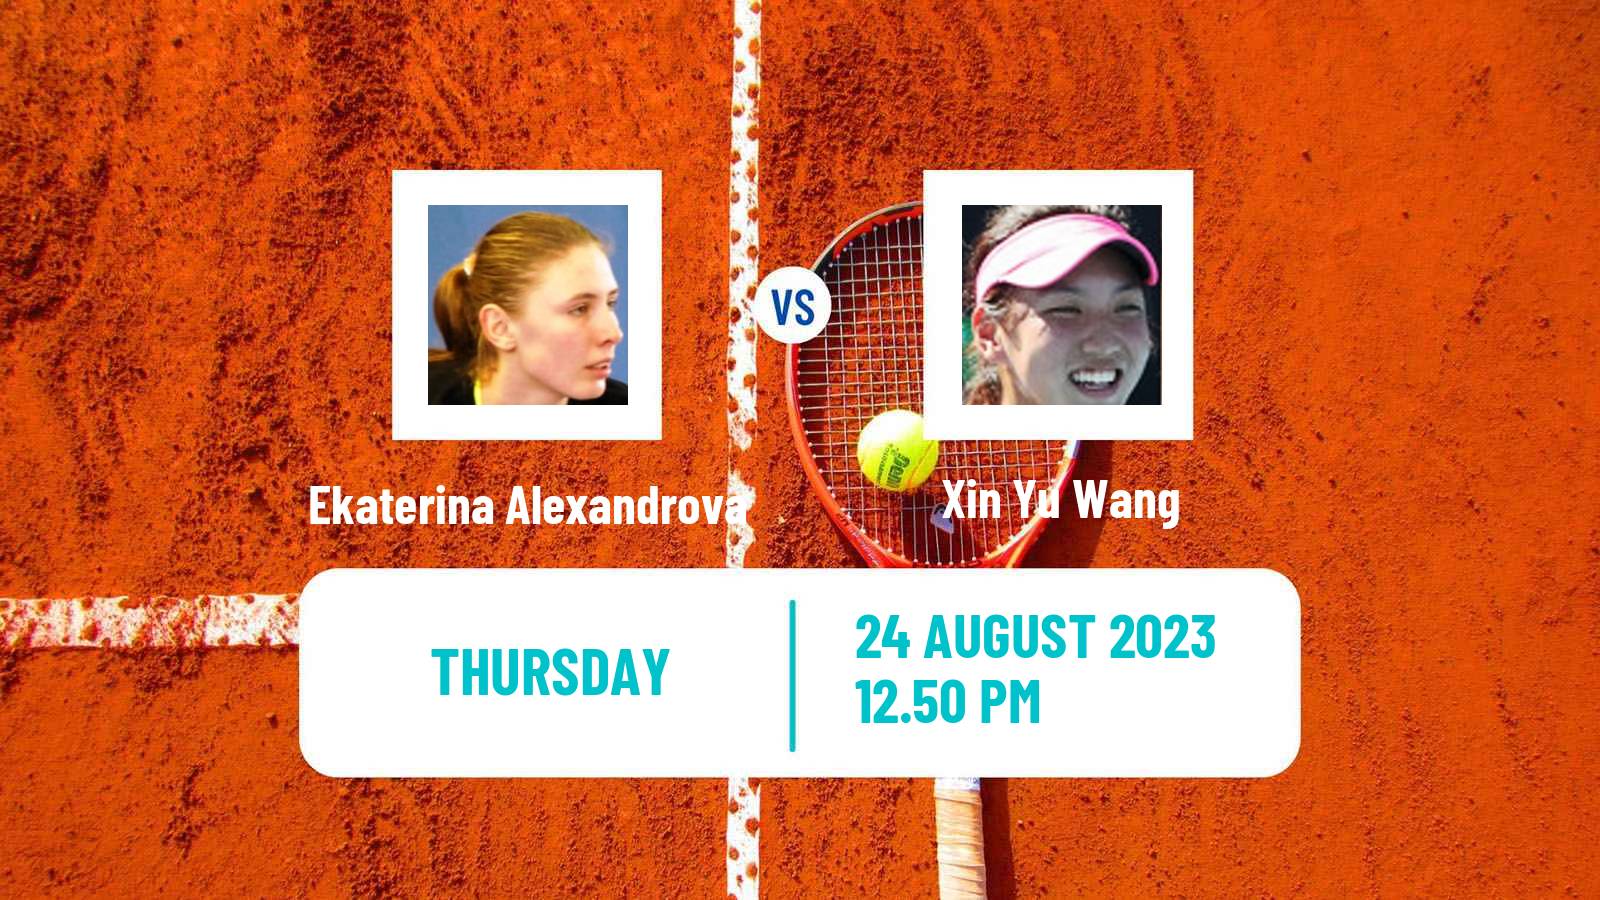 Tennis WTA Cleveland Ekaterina Alexandrova - Xin Yu Wang